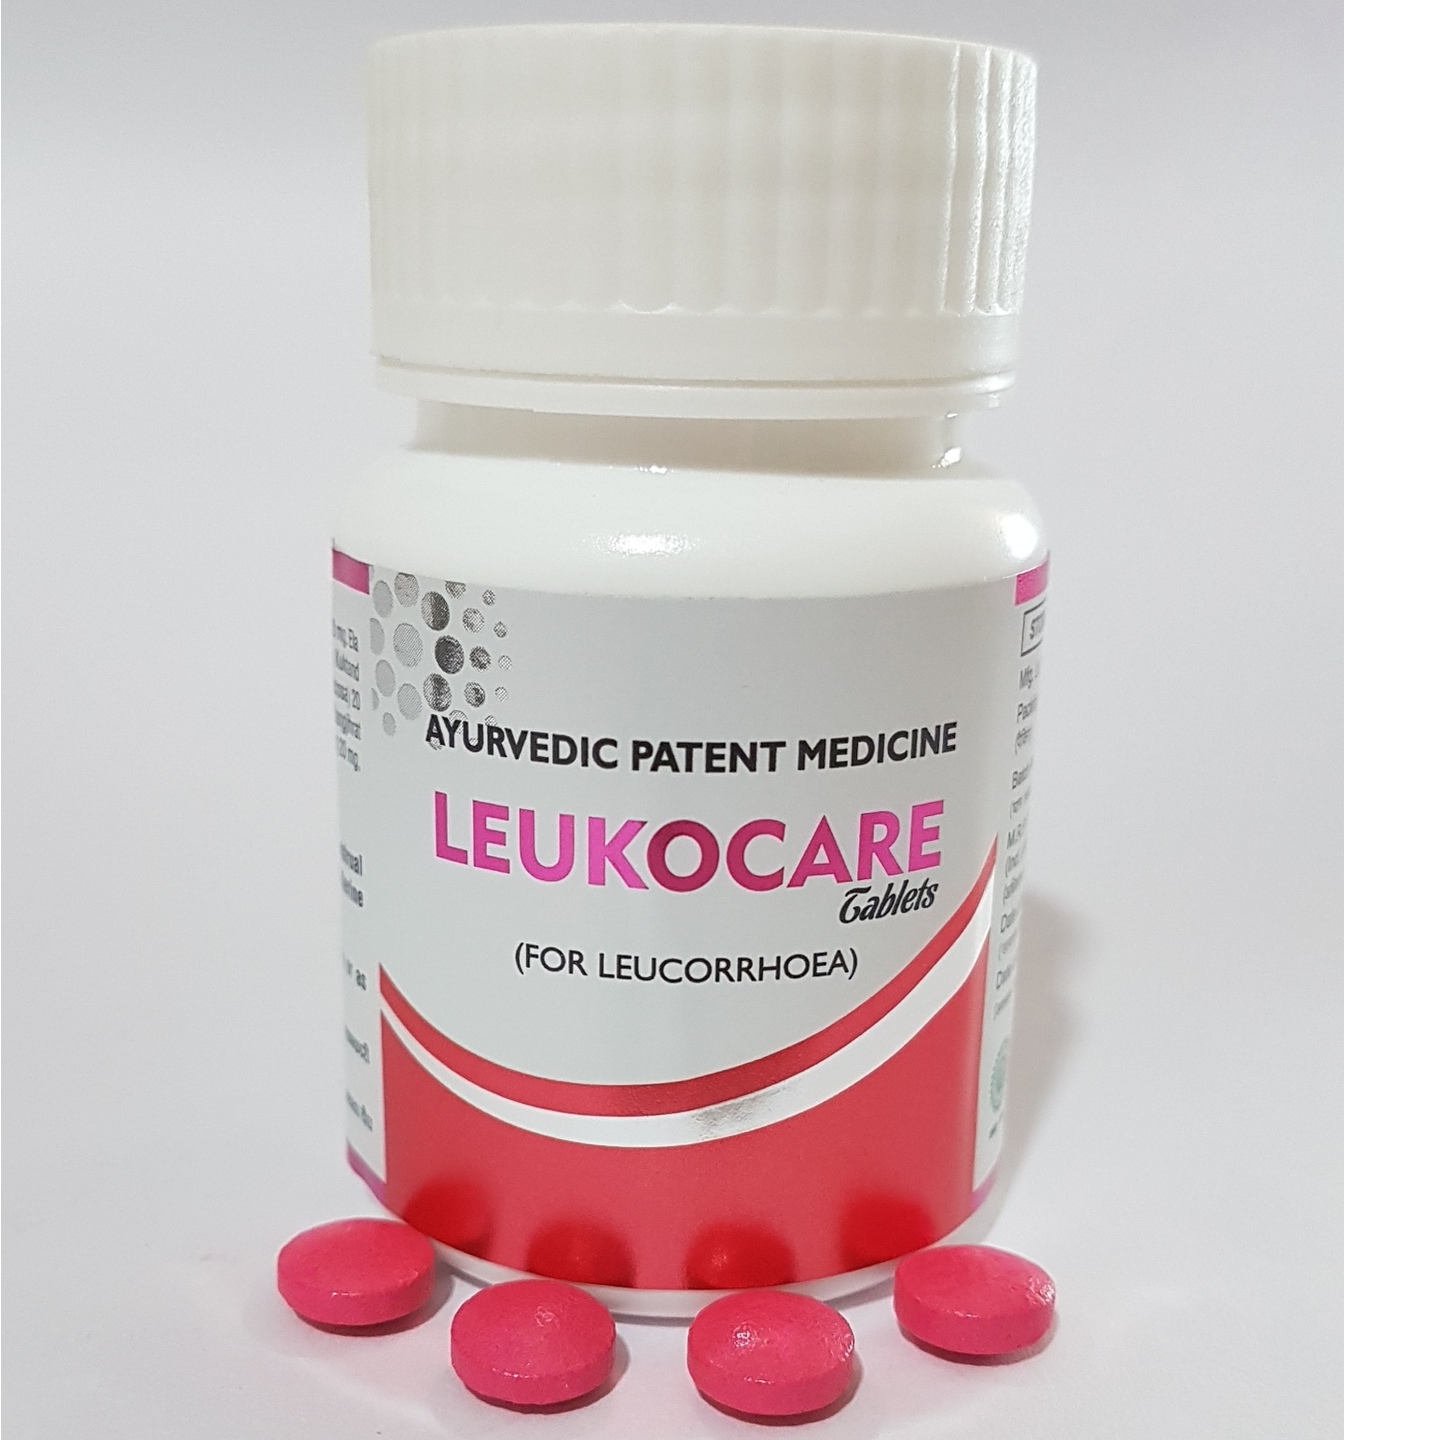 LEUKOCARE TABLETS For all sorts of Leucorrhoea